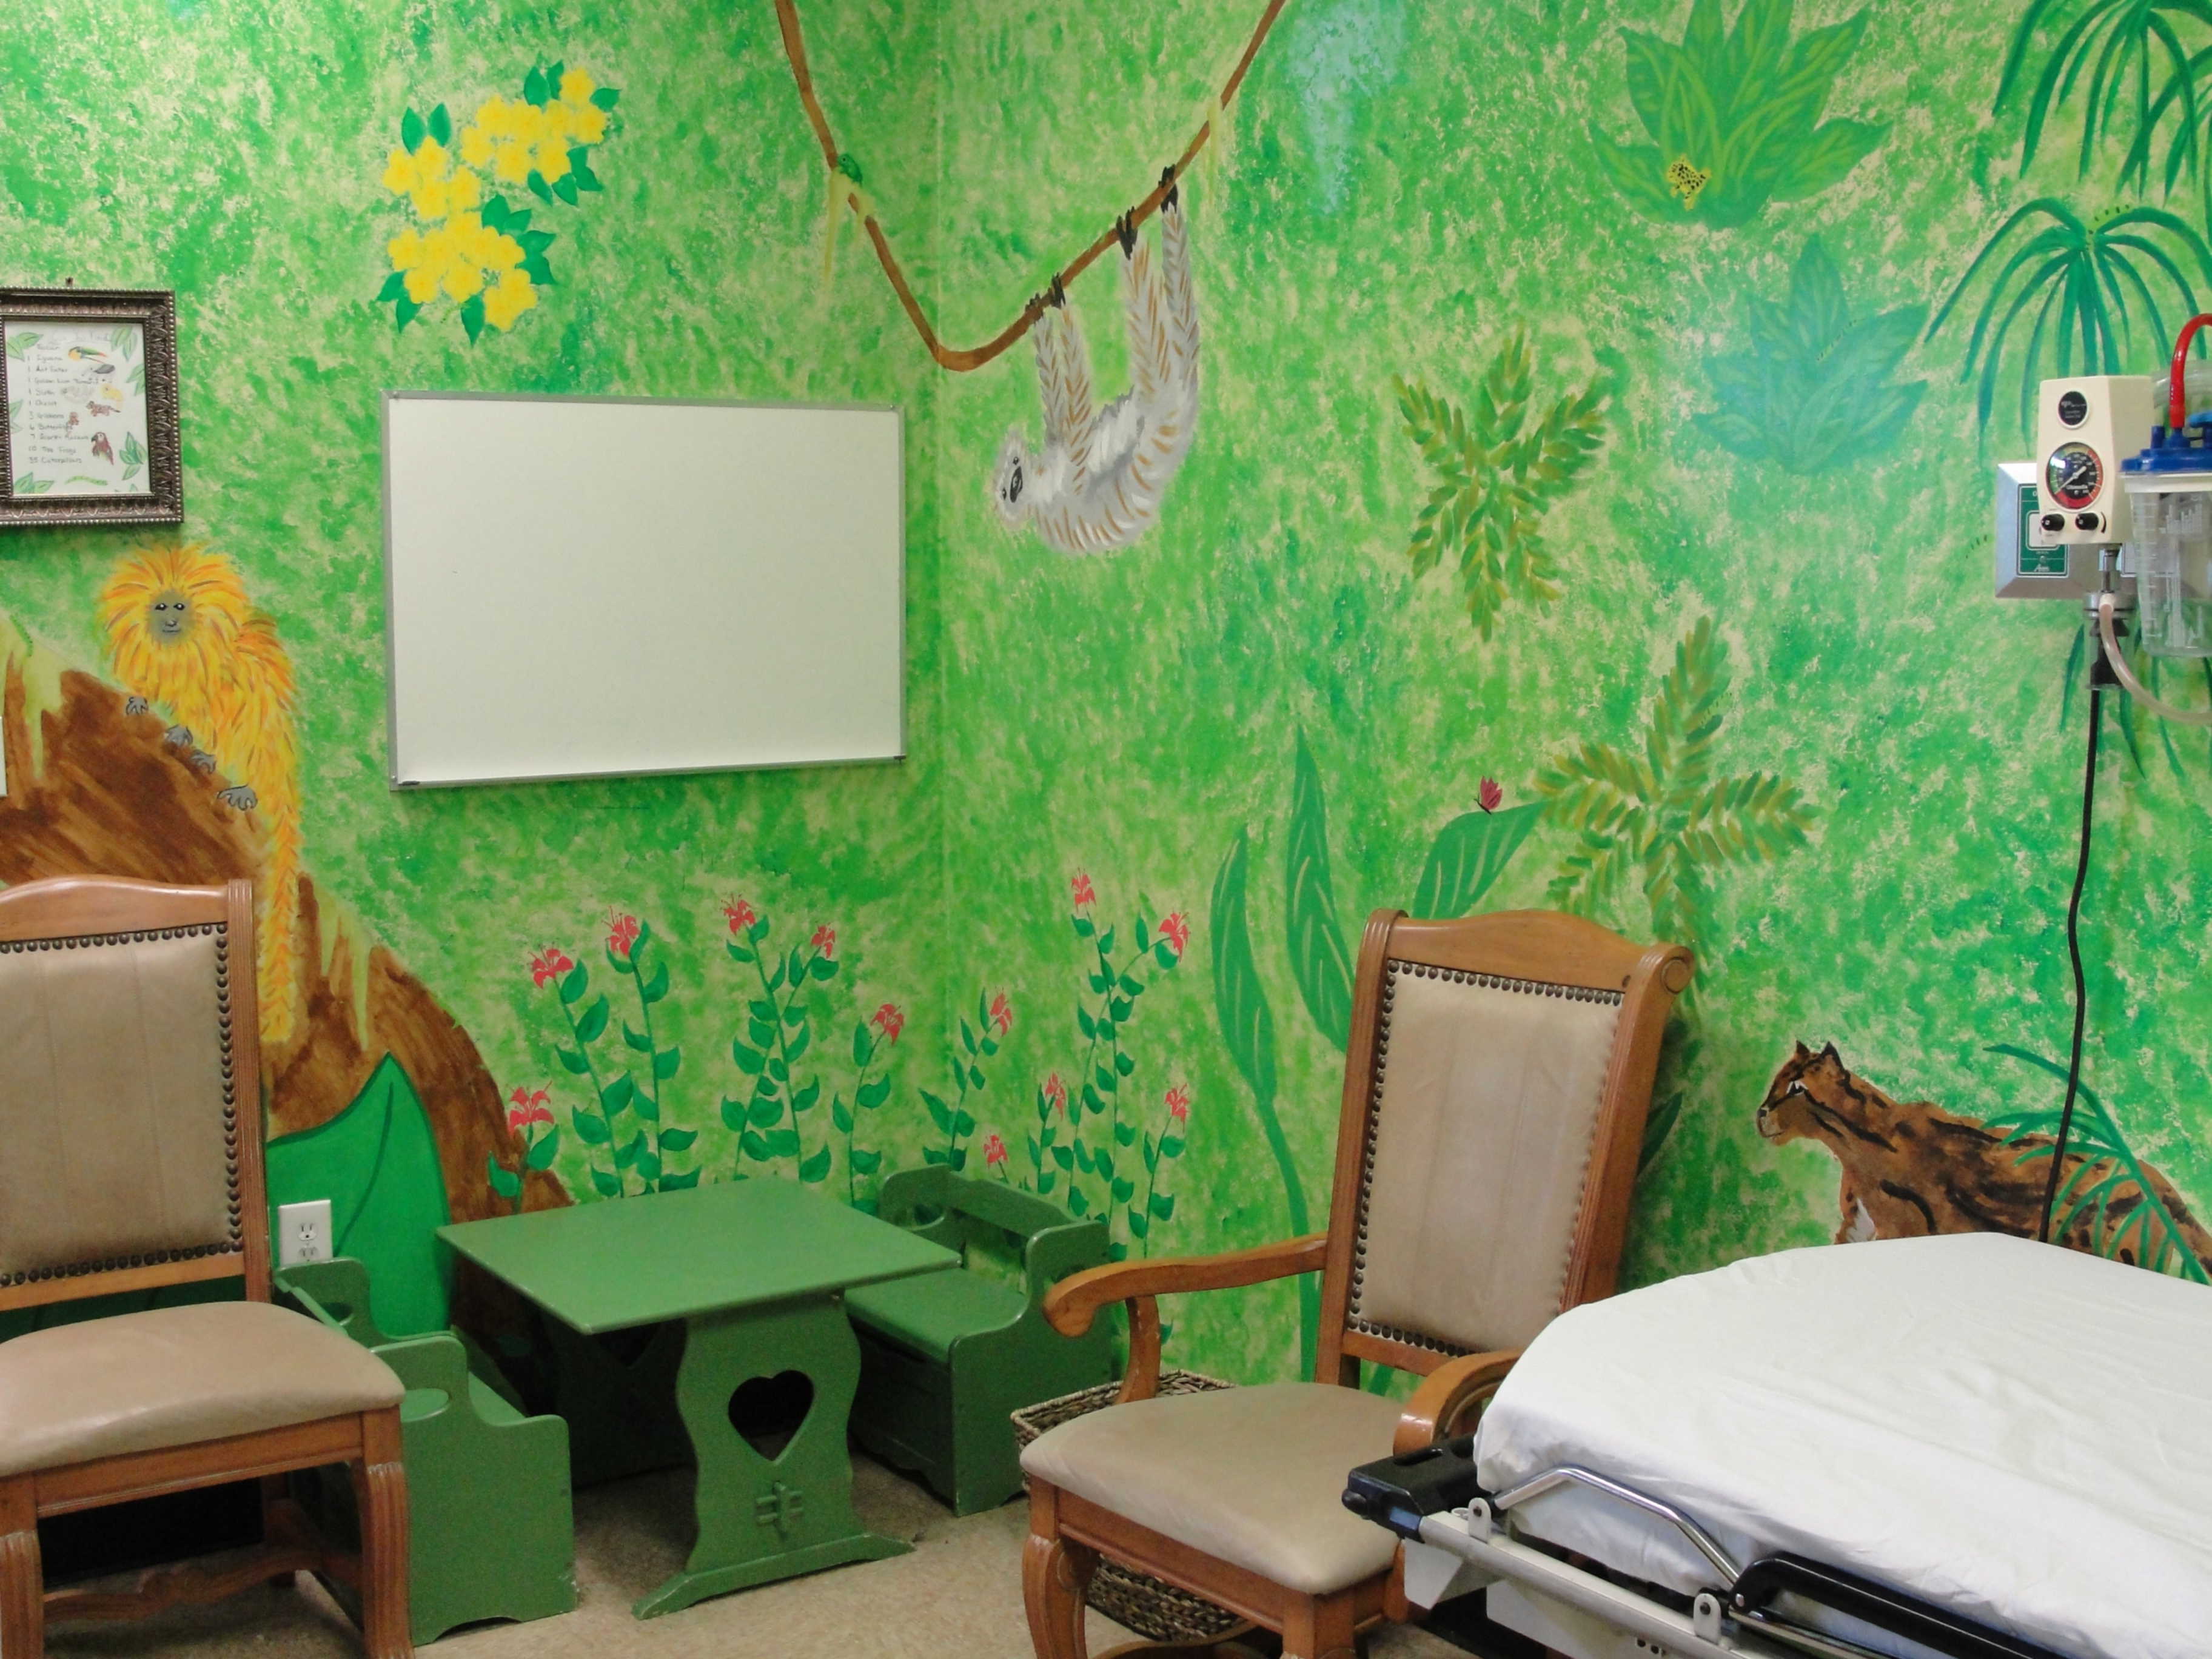 pediatric room for medical care of children